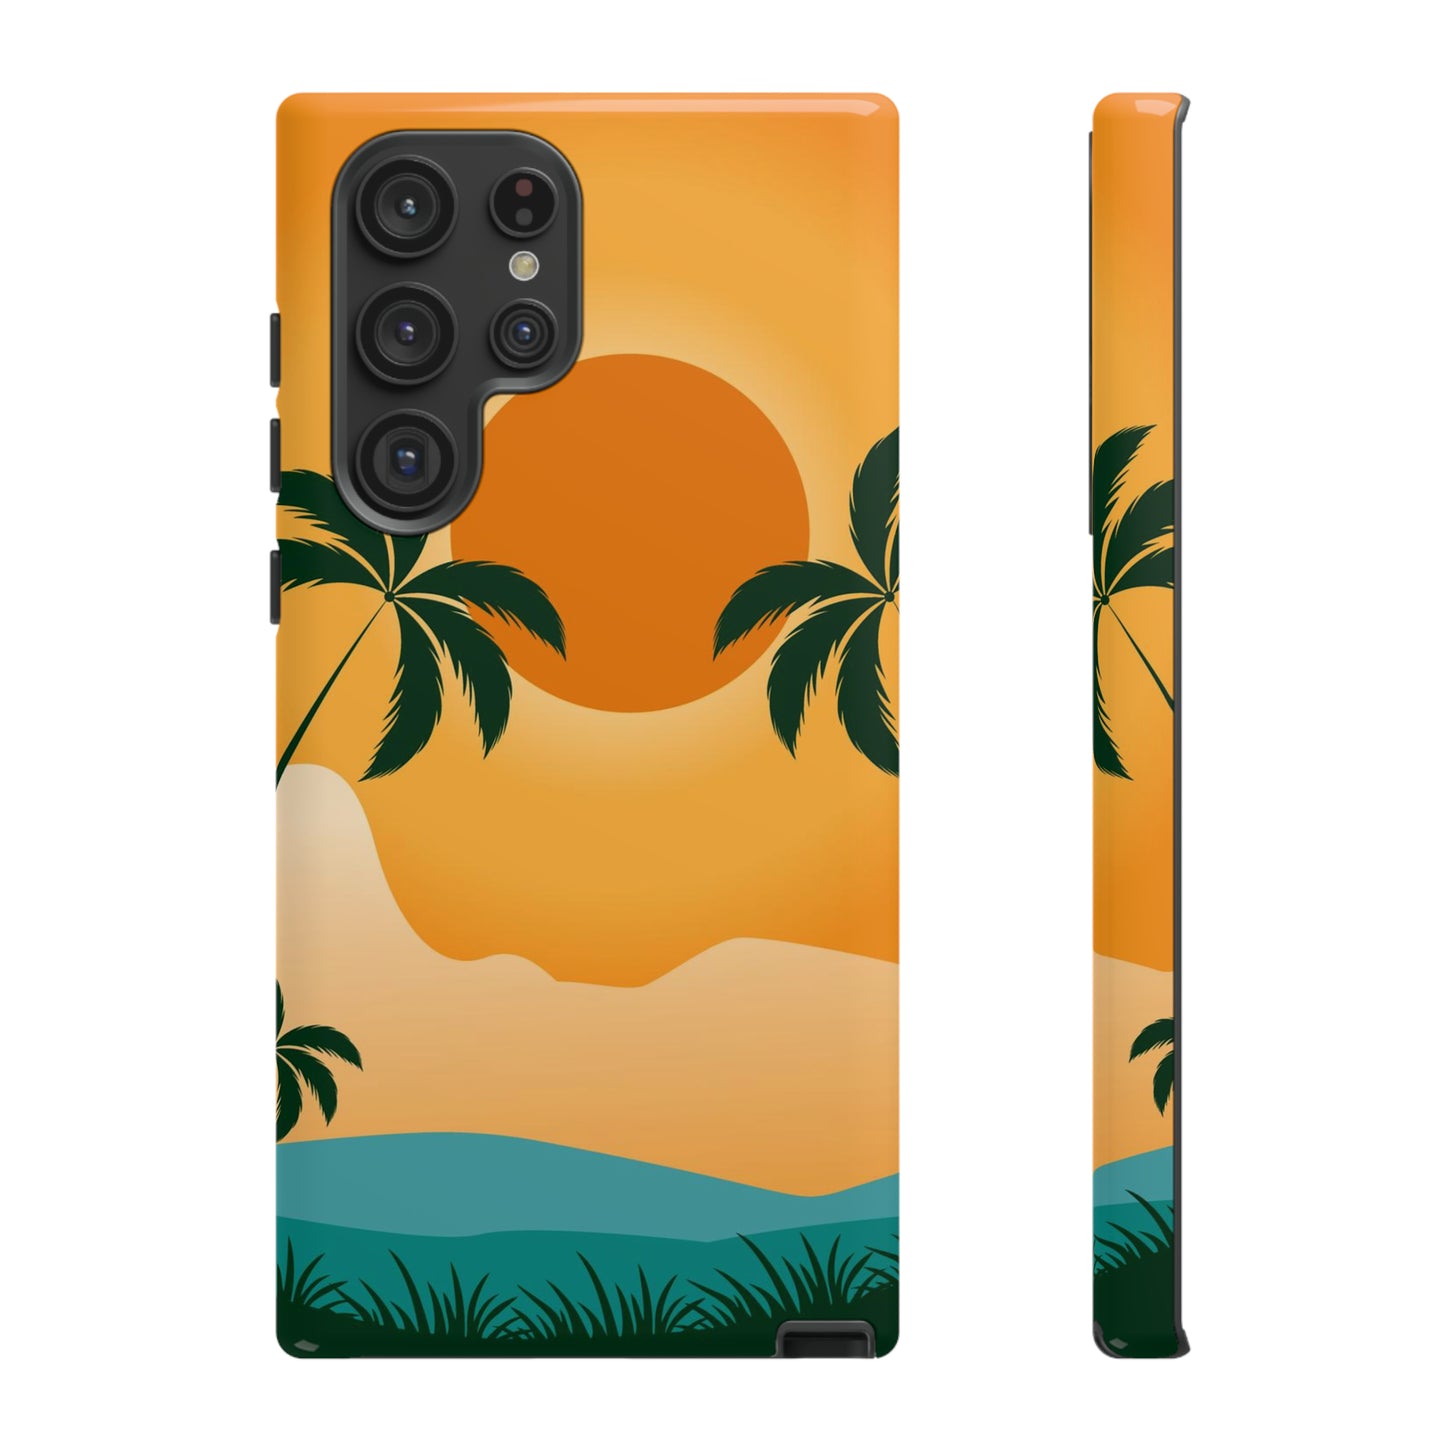 Sunset palm Samsung phone case